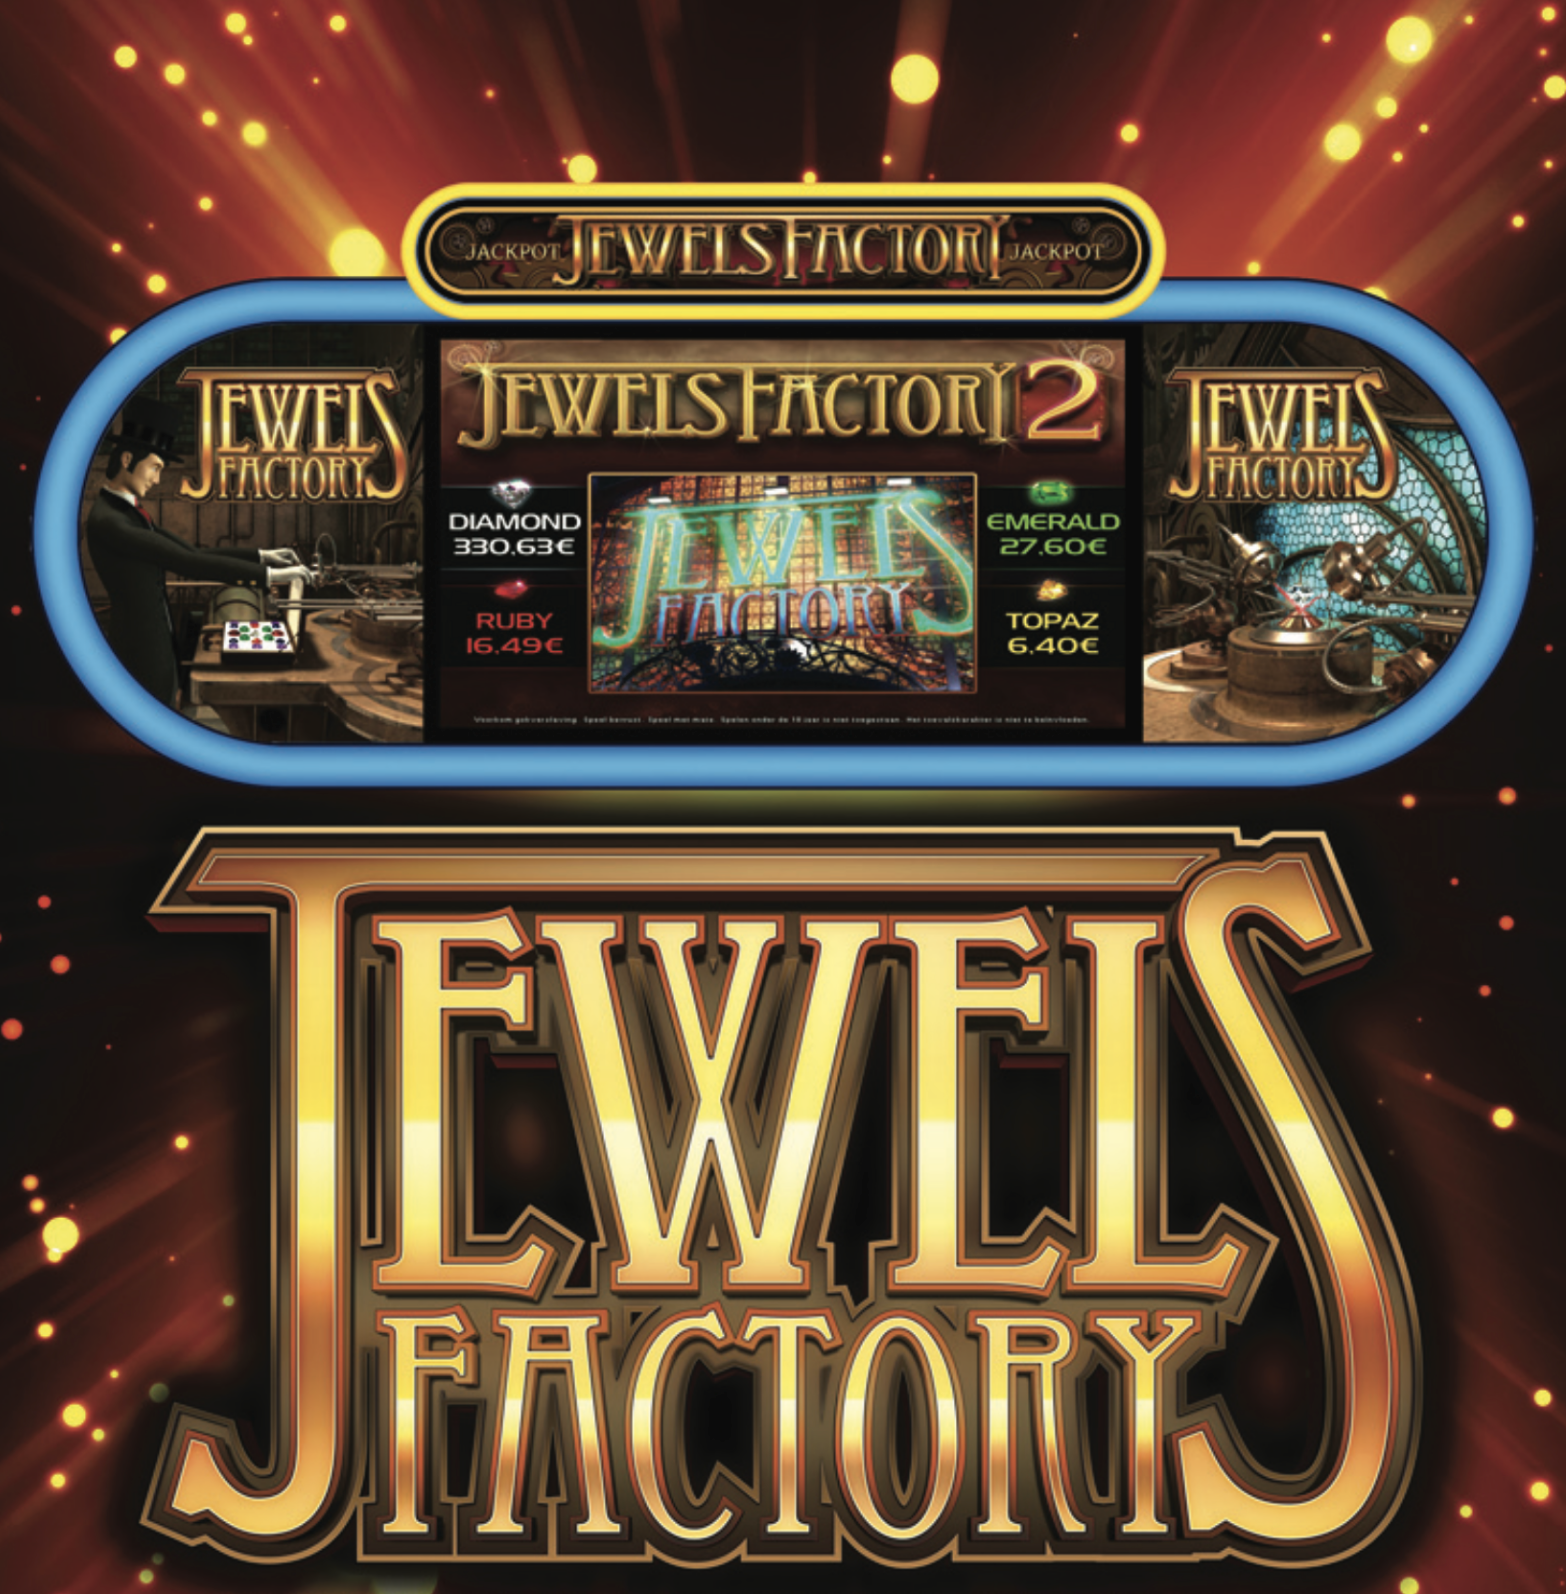 Jewels Factory Jackpot